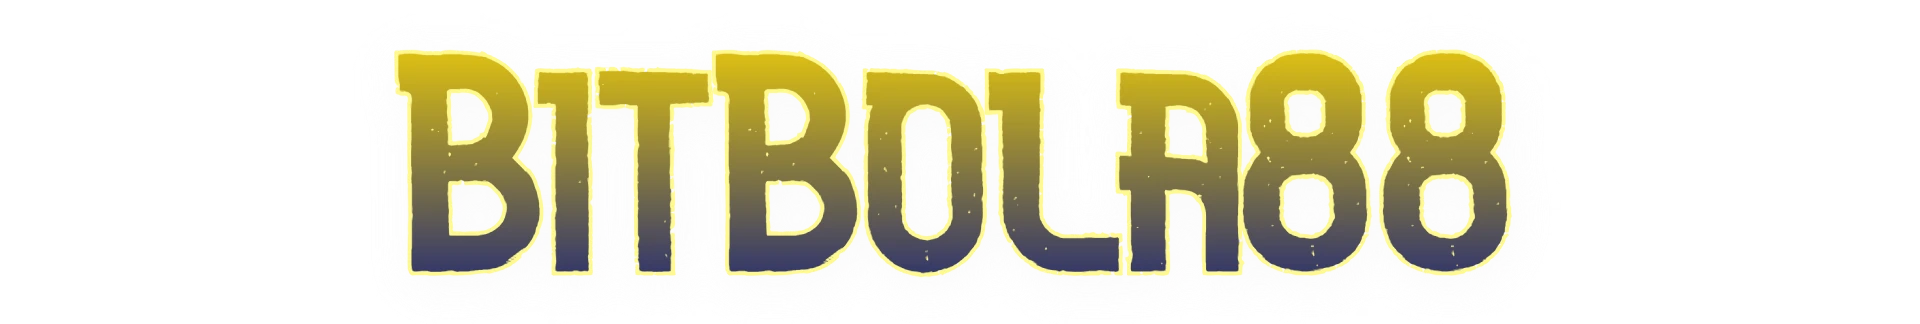 BitBola88